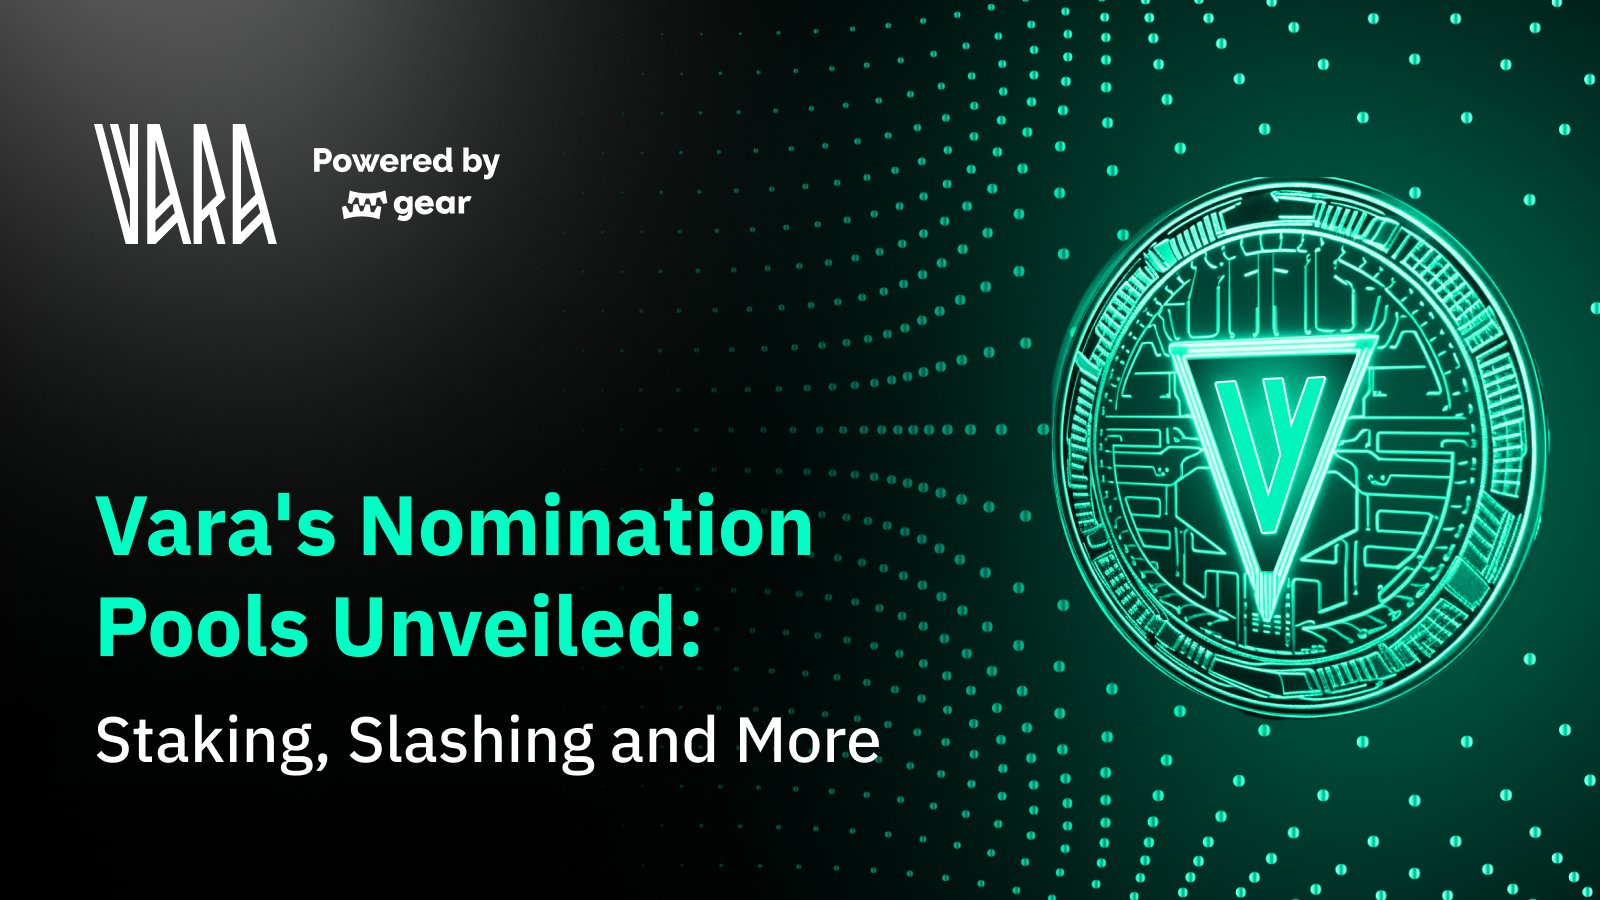 Vara’s Nomination Pools Unveiled: Staking, Slashing and More